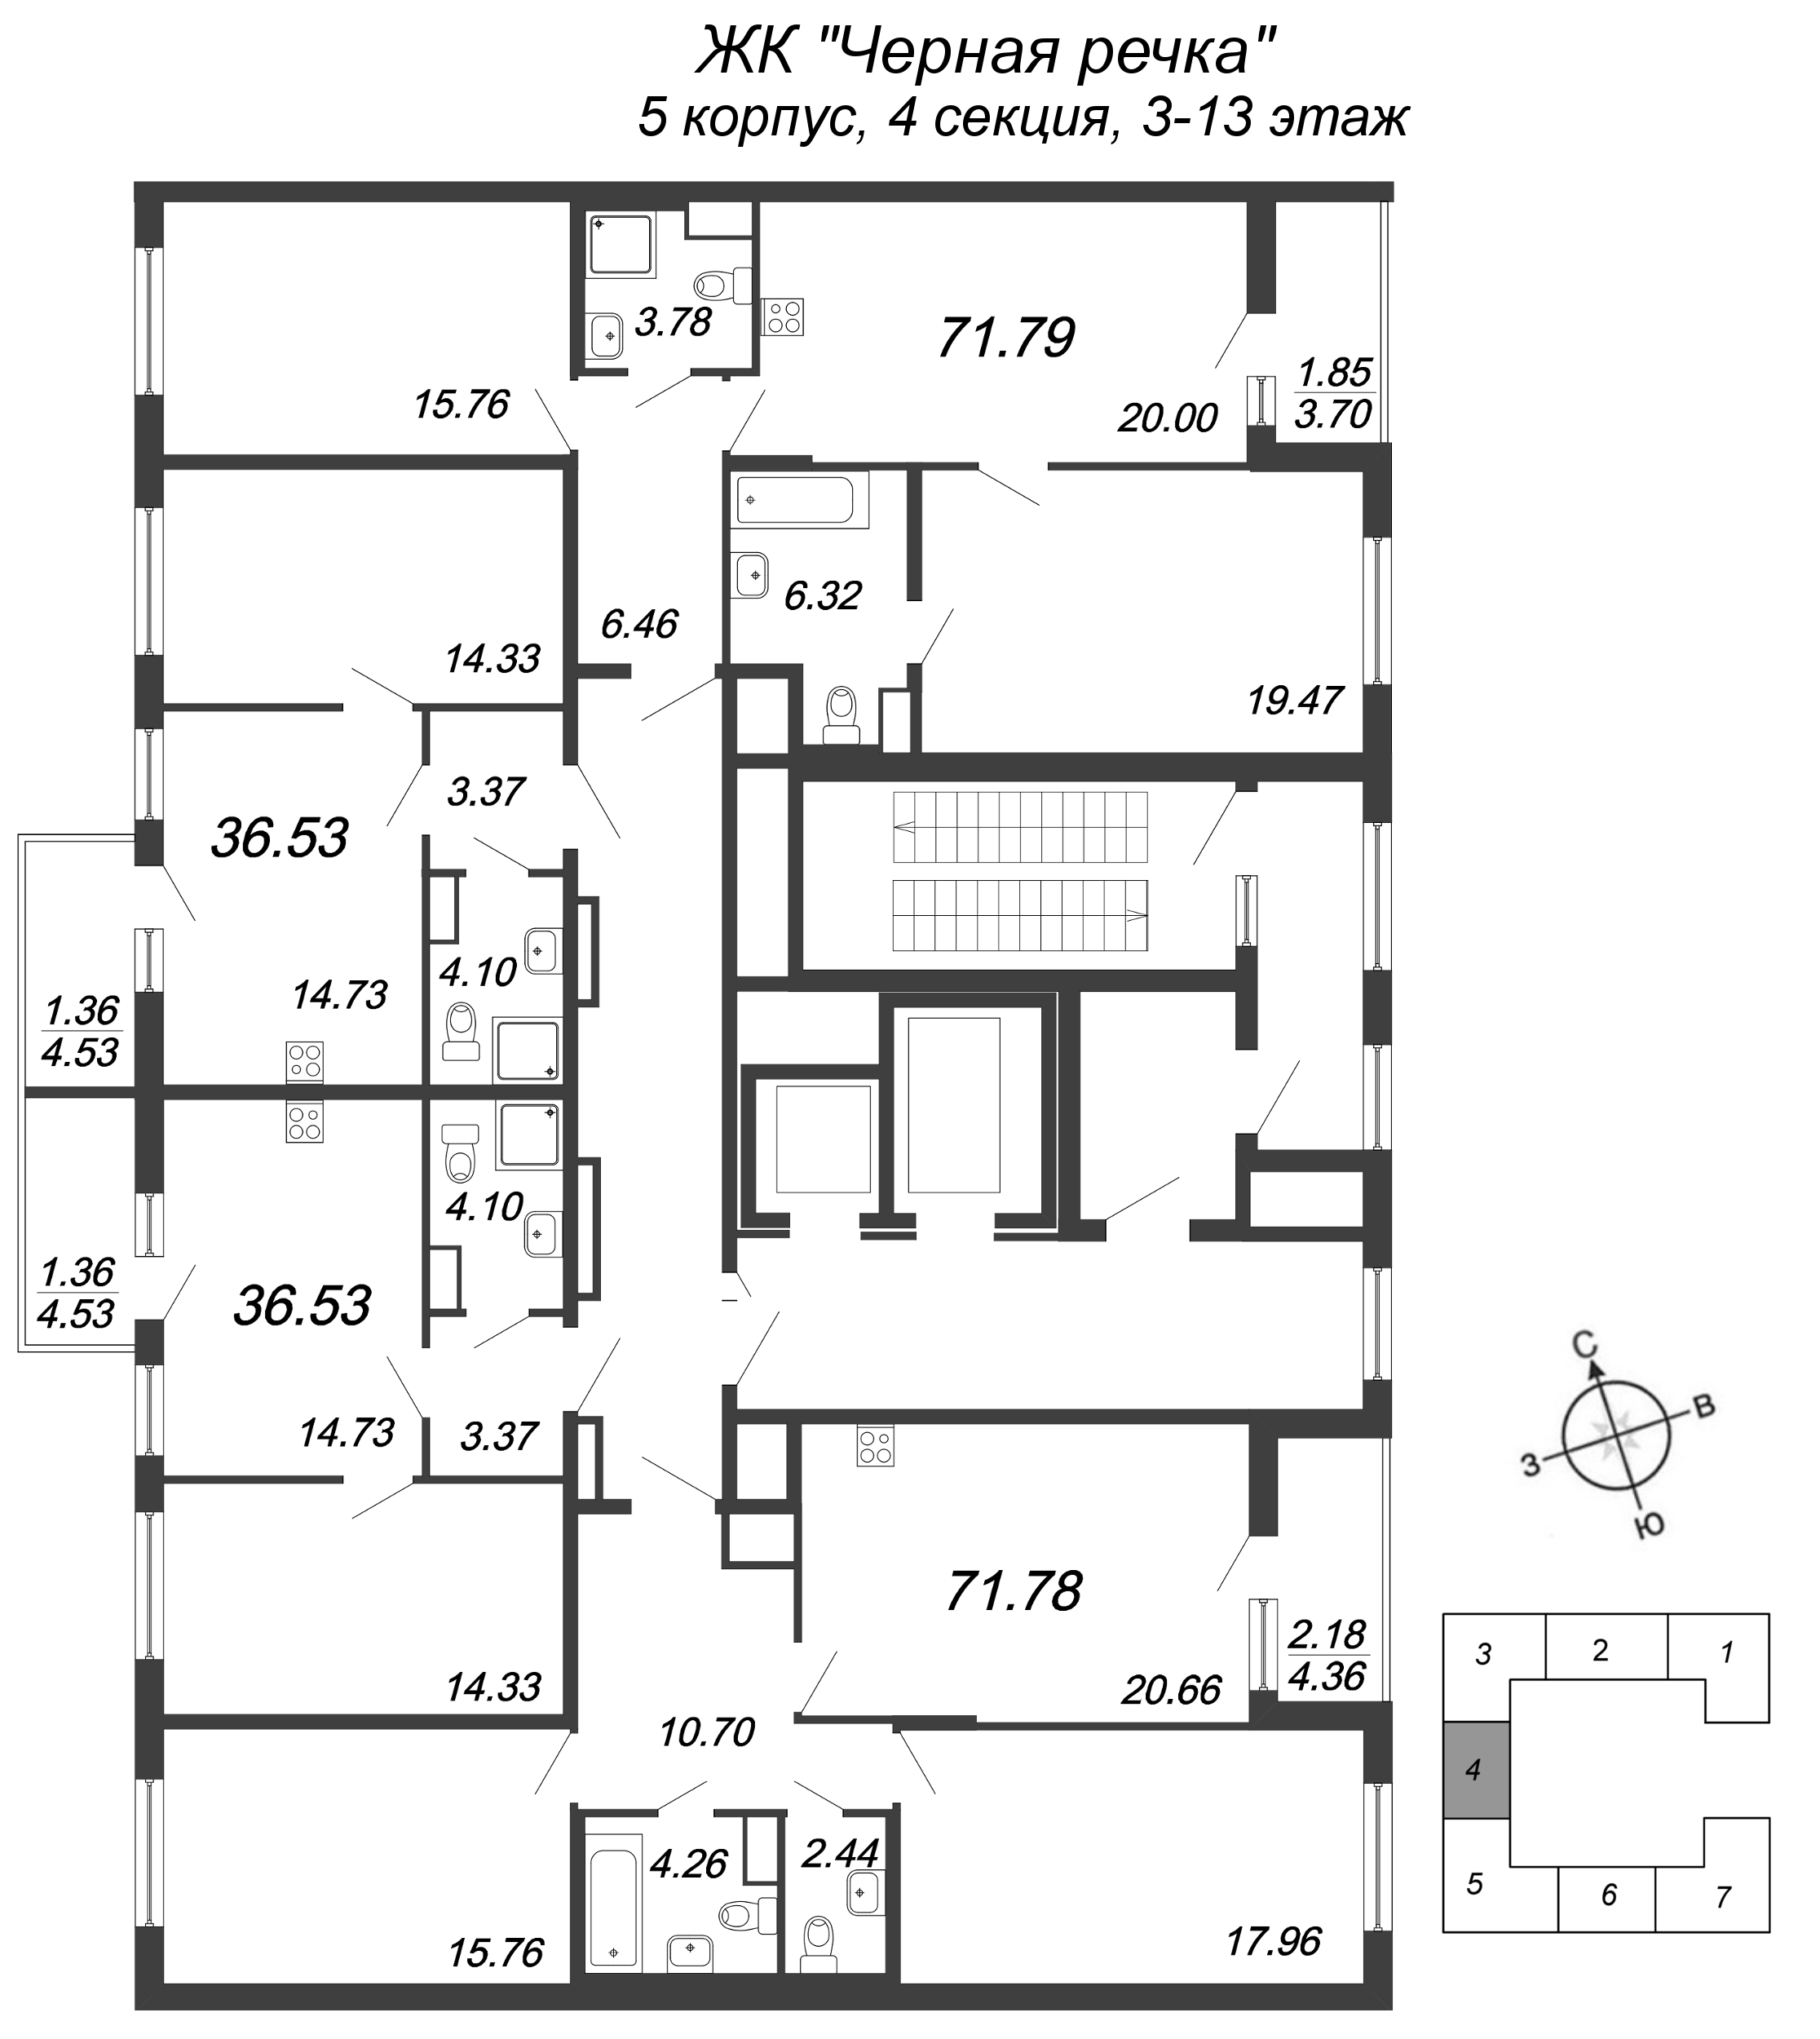 3-комнатная (Евро) квартира, 71.79 м² - планировка этажа